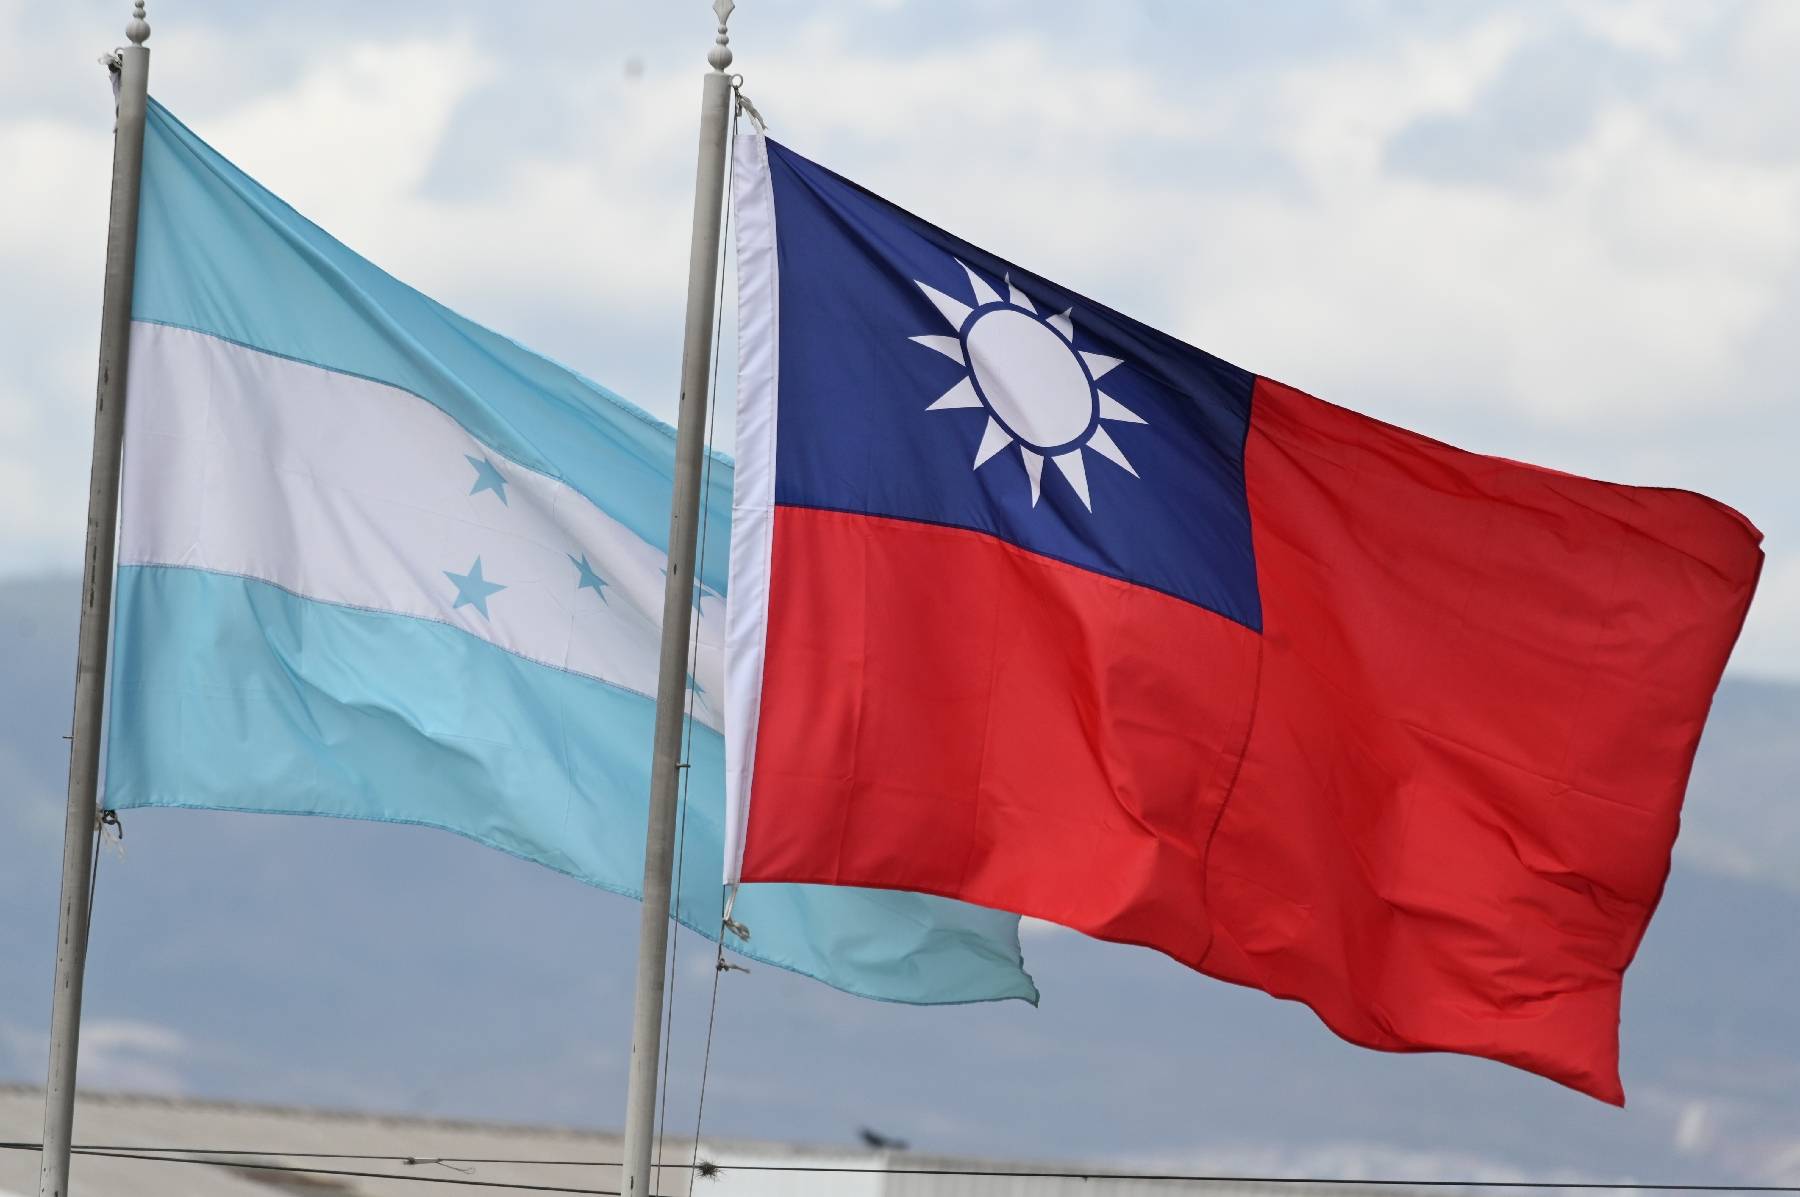 Le Honduras rompt ses relations diplomatiques avec Taïwan